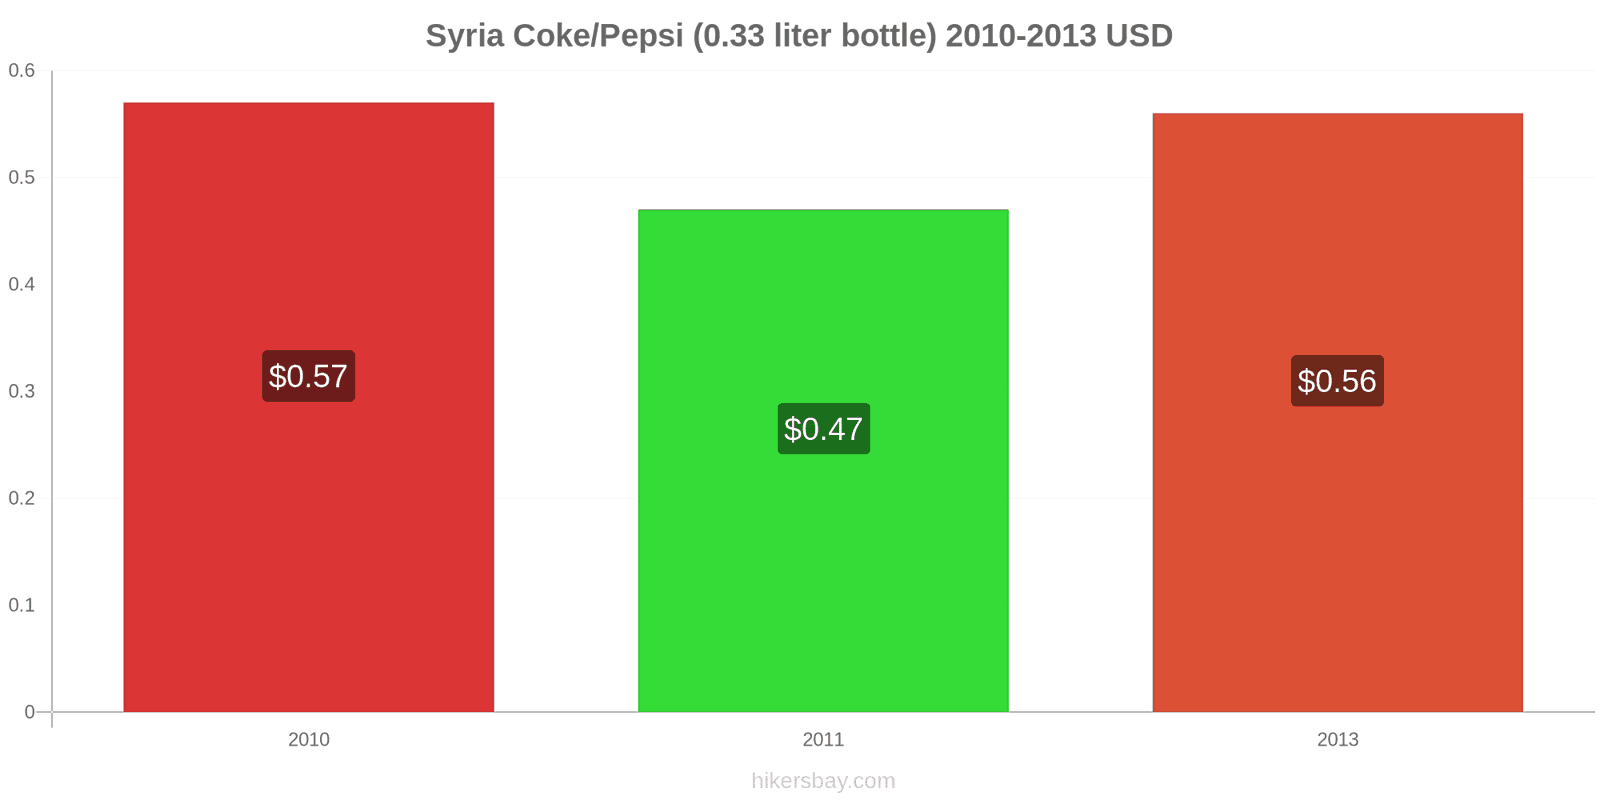 Syria price changes Coke/Pepsi (0.33 liter bottle) hikersbay.com